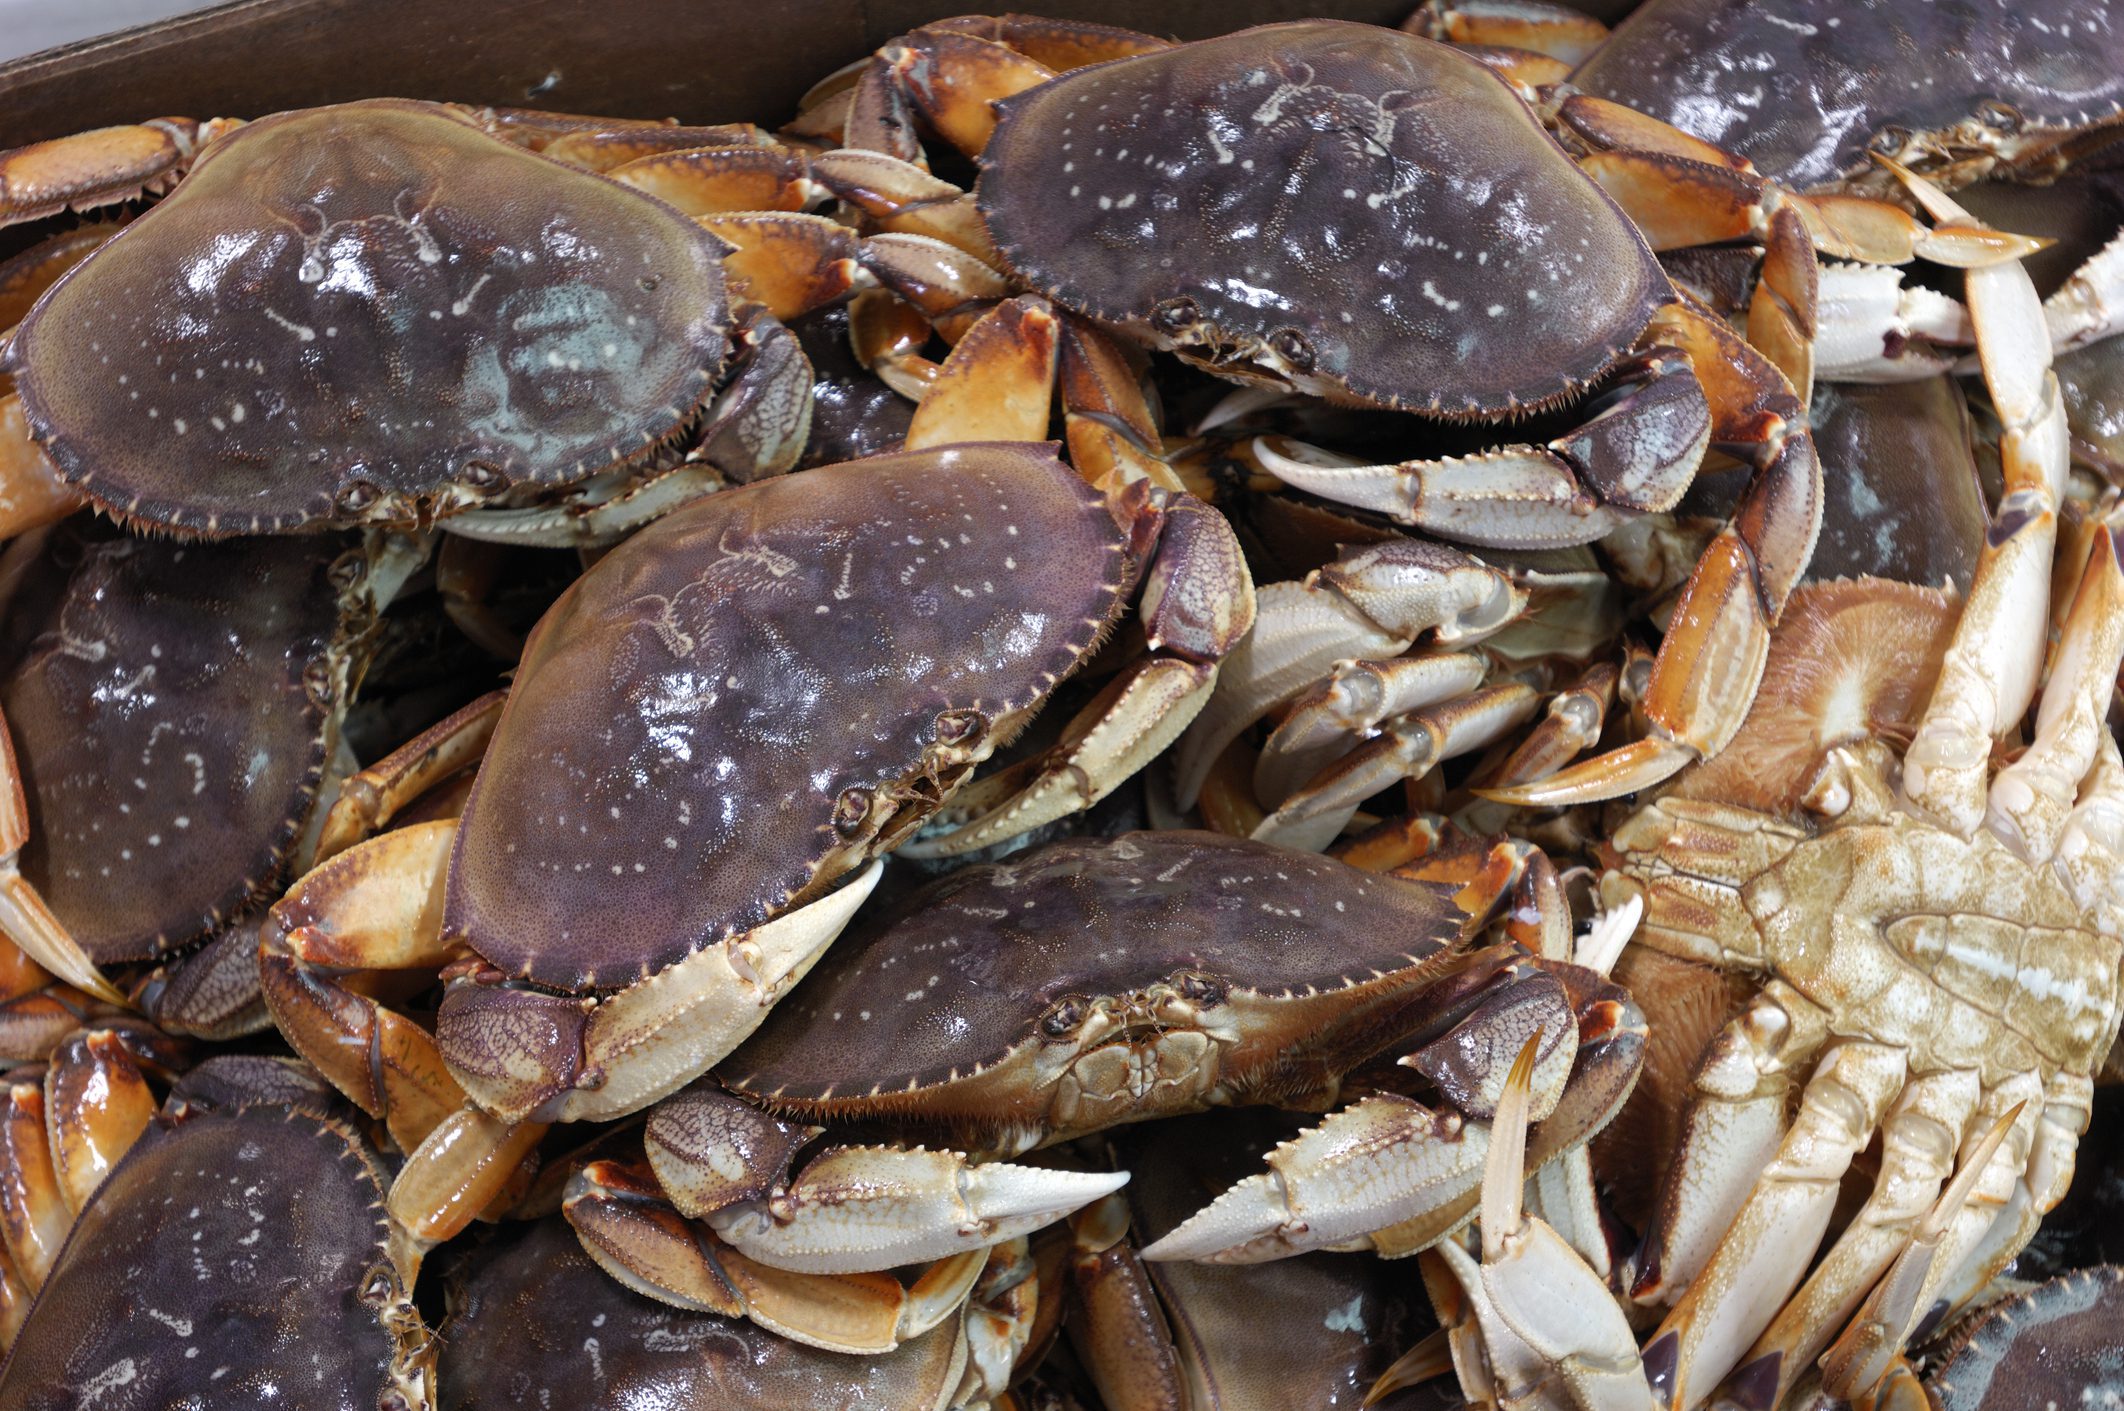 Ocean acidification impacts Dungeness crab shells